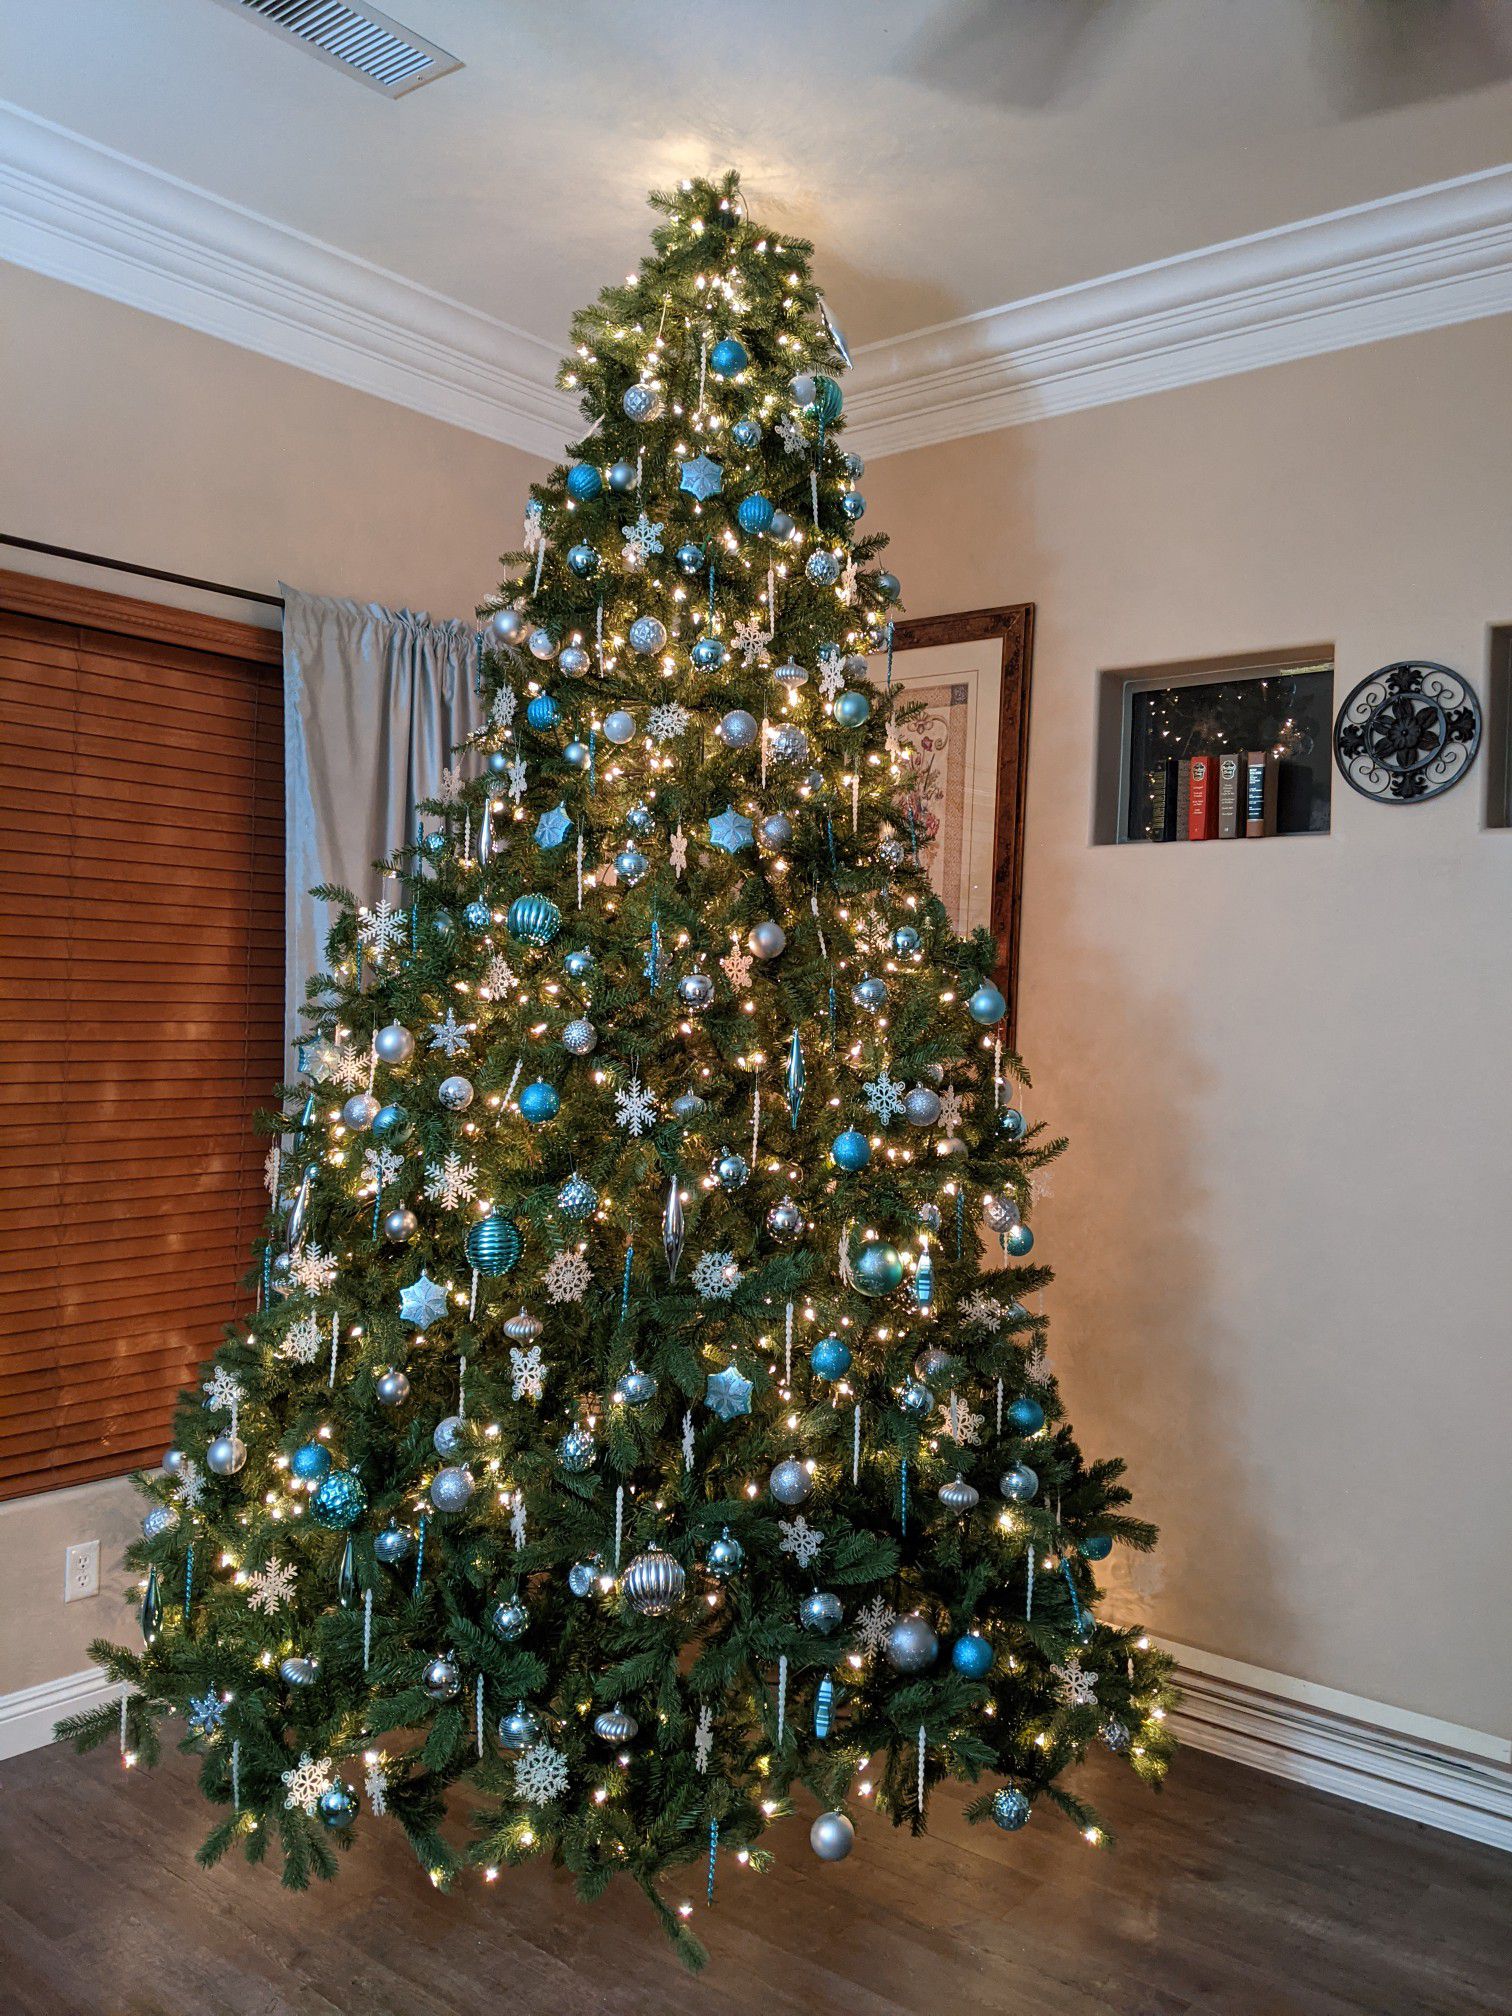 Brand new 12-ft Christmas tree